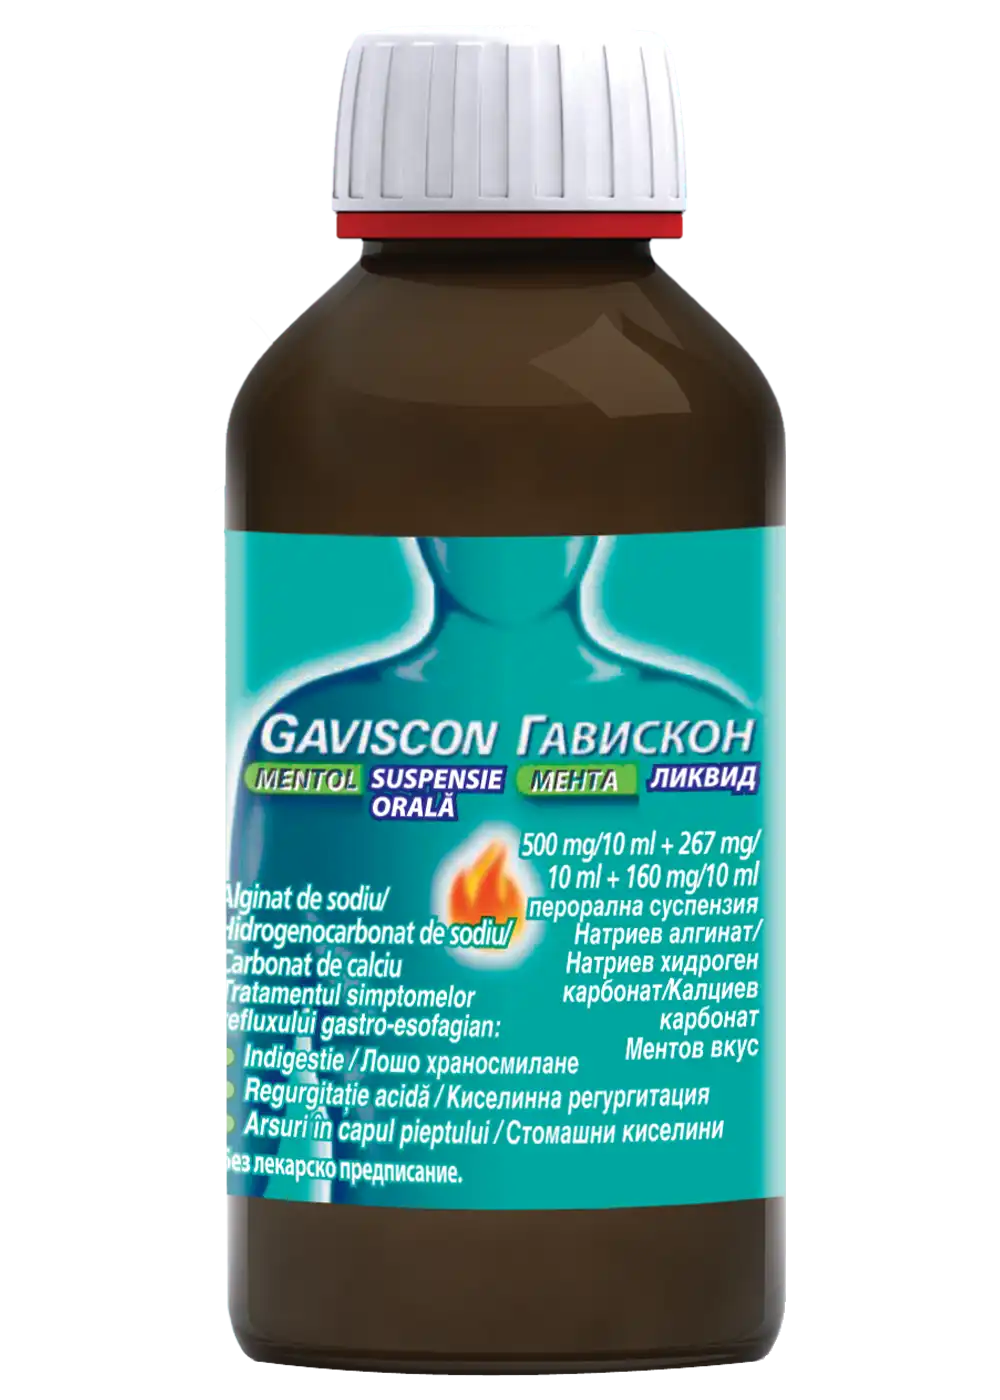 Antiacide (reflux gastroesofagian) - Gaviscon menthol suspensie orală * 200 ml, clinicafarm.ro